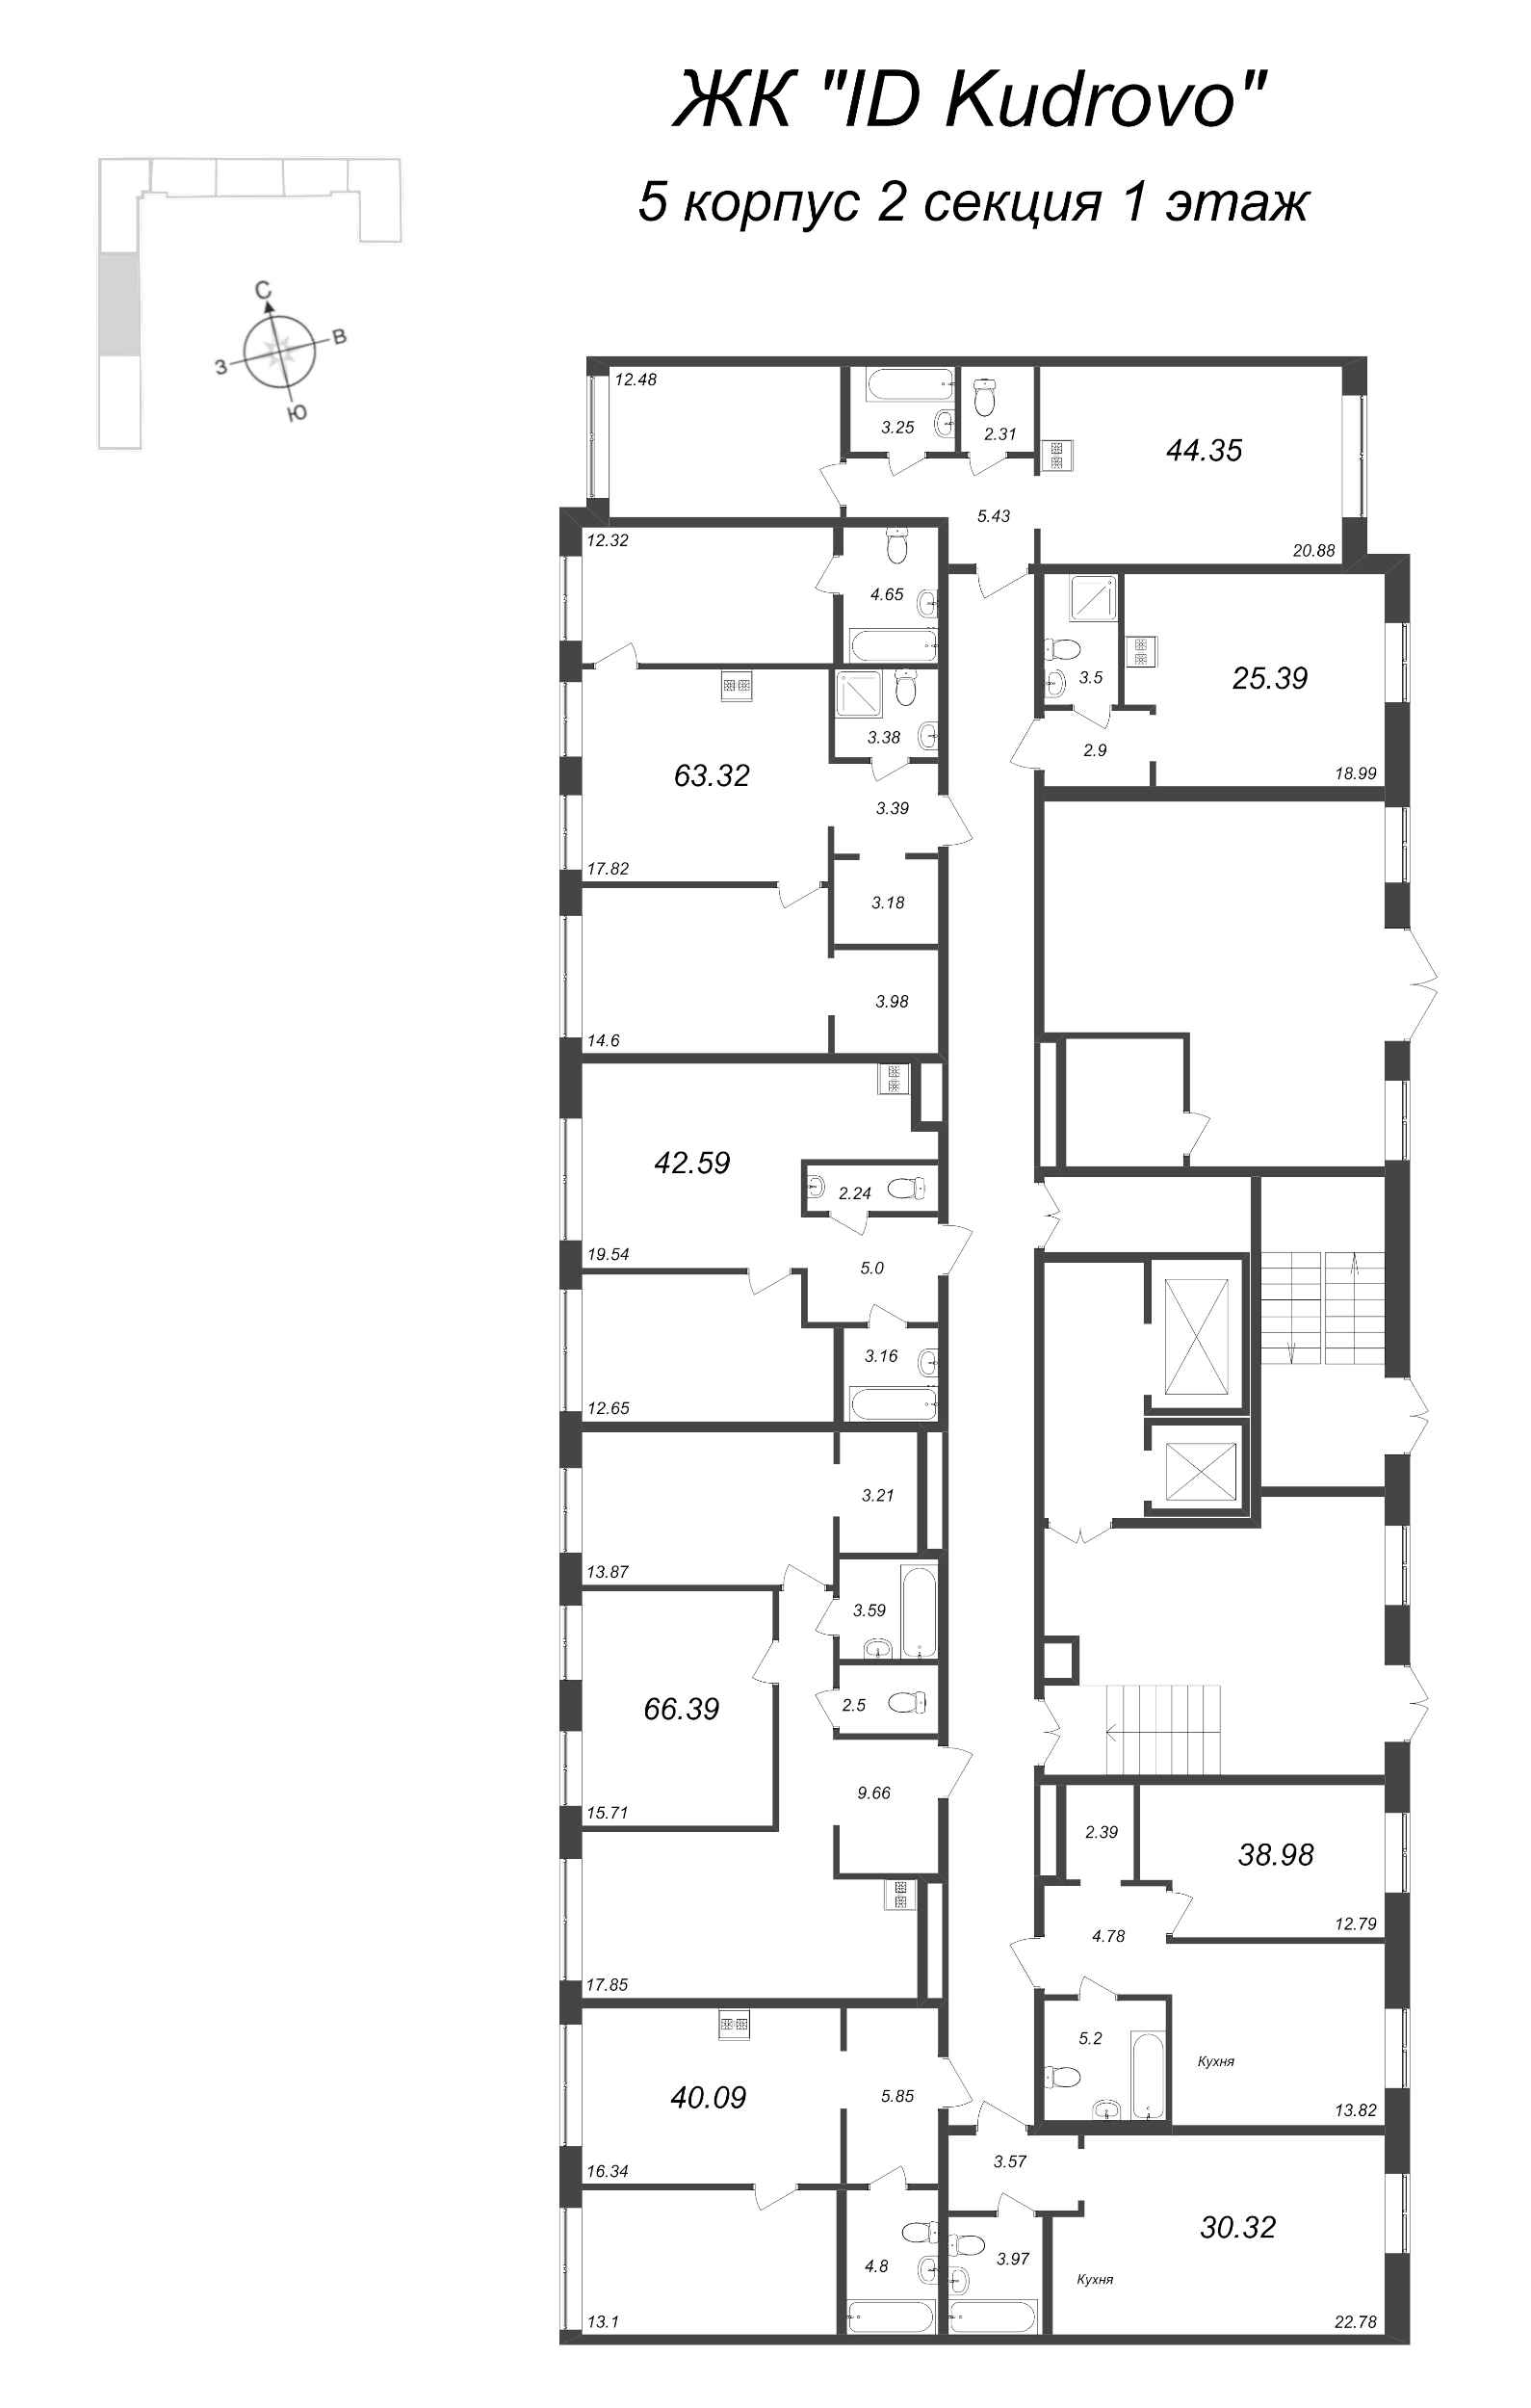 Квартира-студия, 25.39 м² в ЖК "ID Kudrovo" - планировка этажа